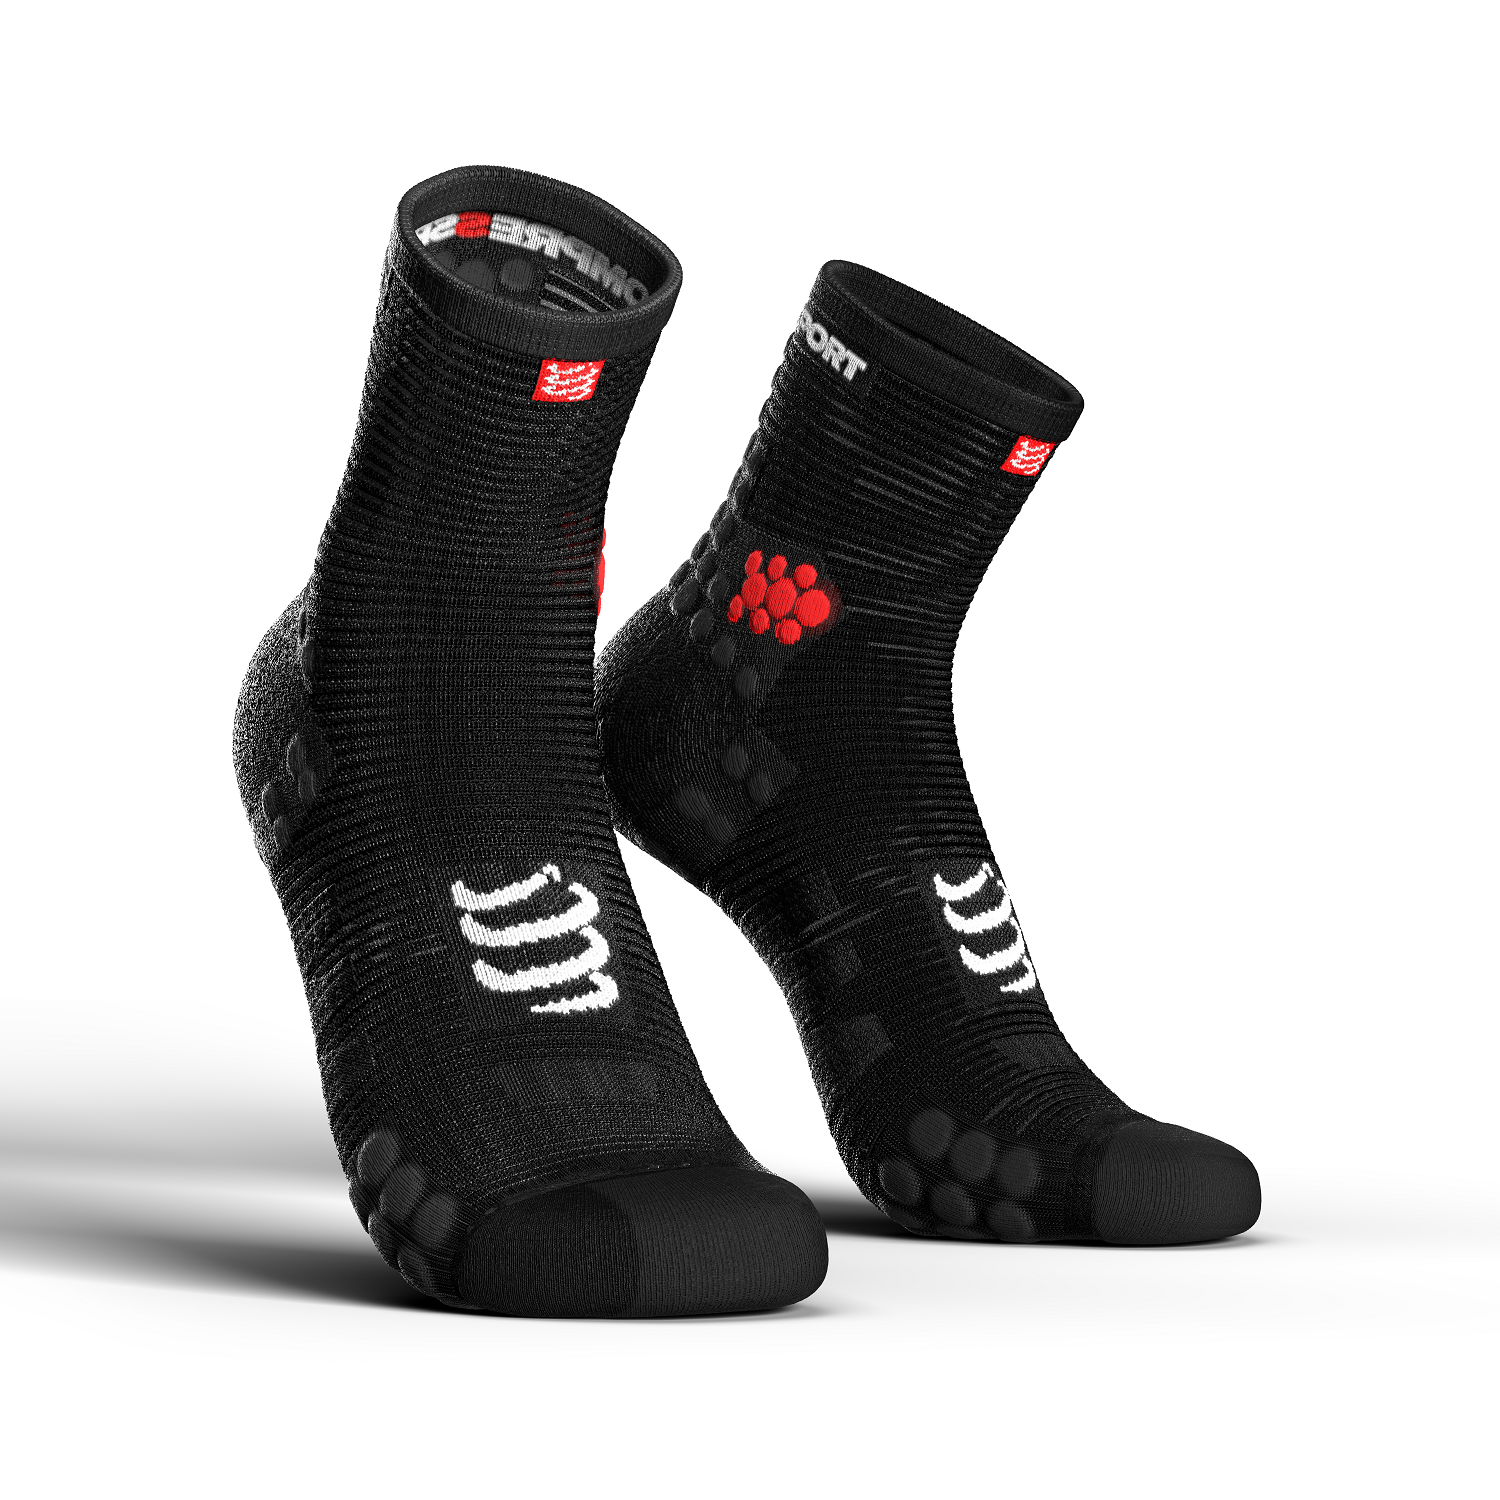 Pro Racing Socks black | Strava Predictathon Hamburg